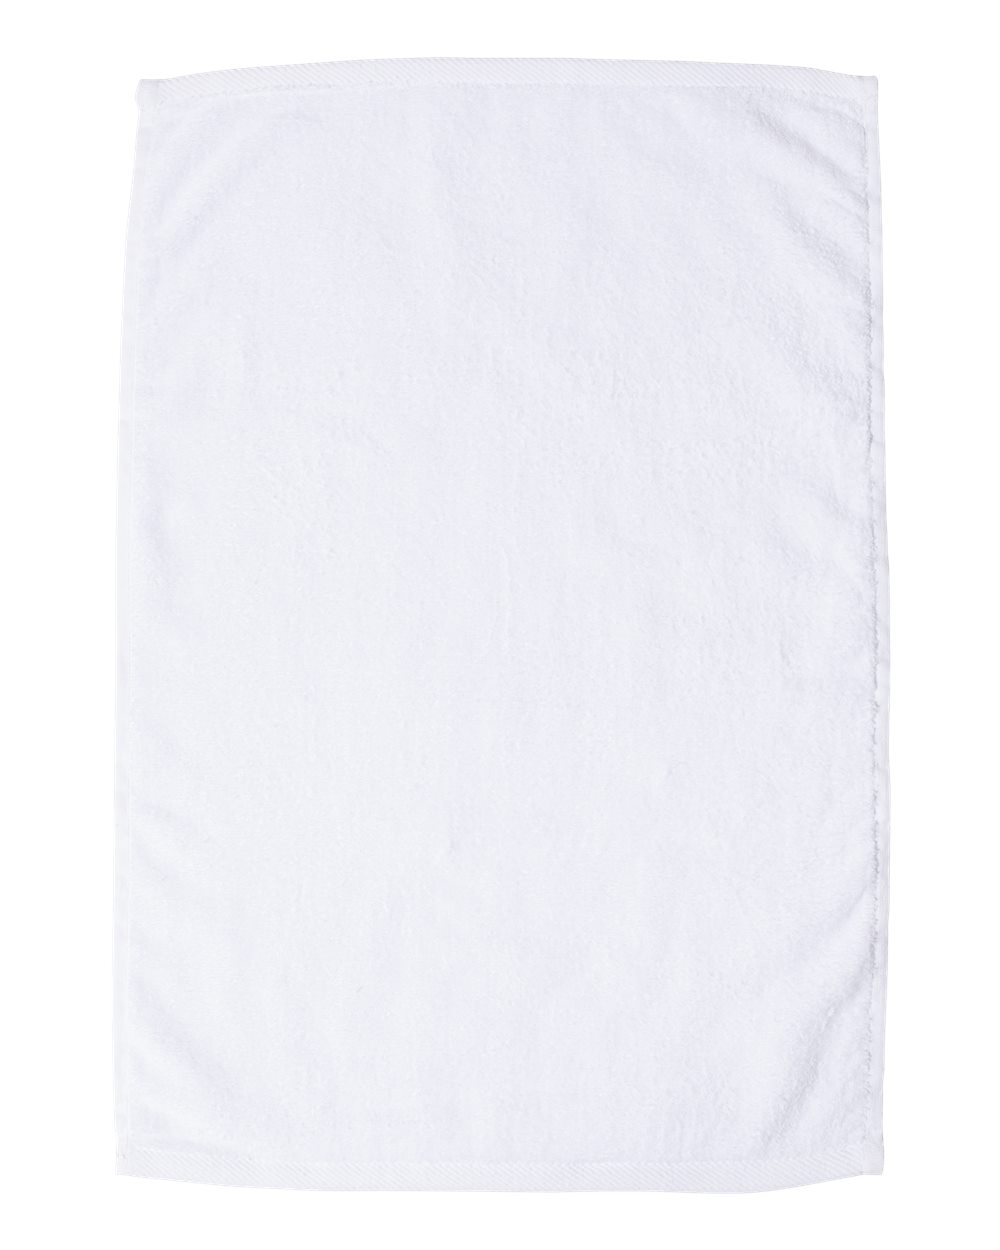 Deluxe Hemmed Hand Towel-Q-Tees